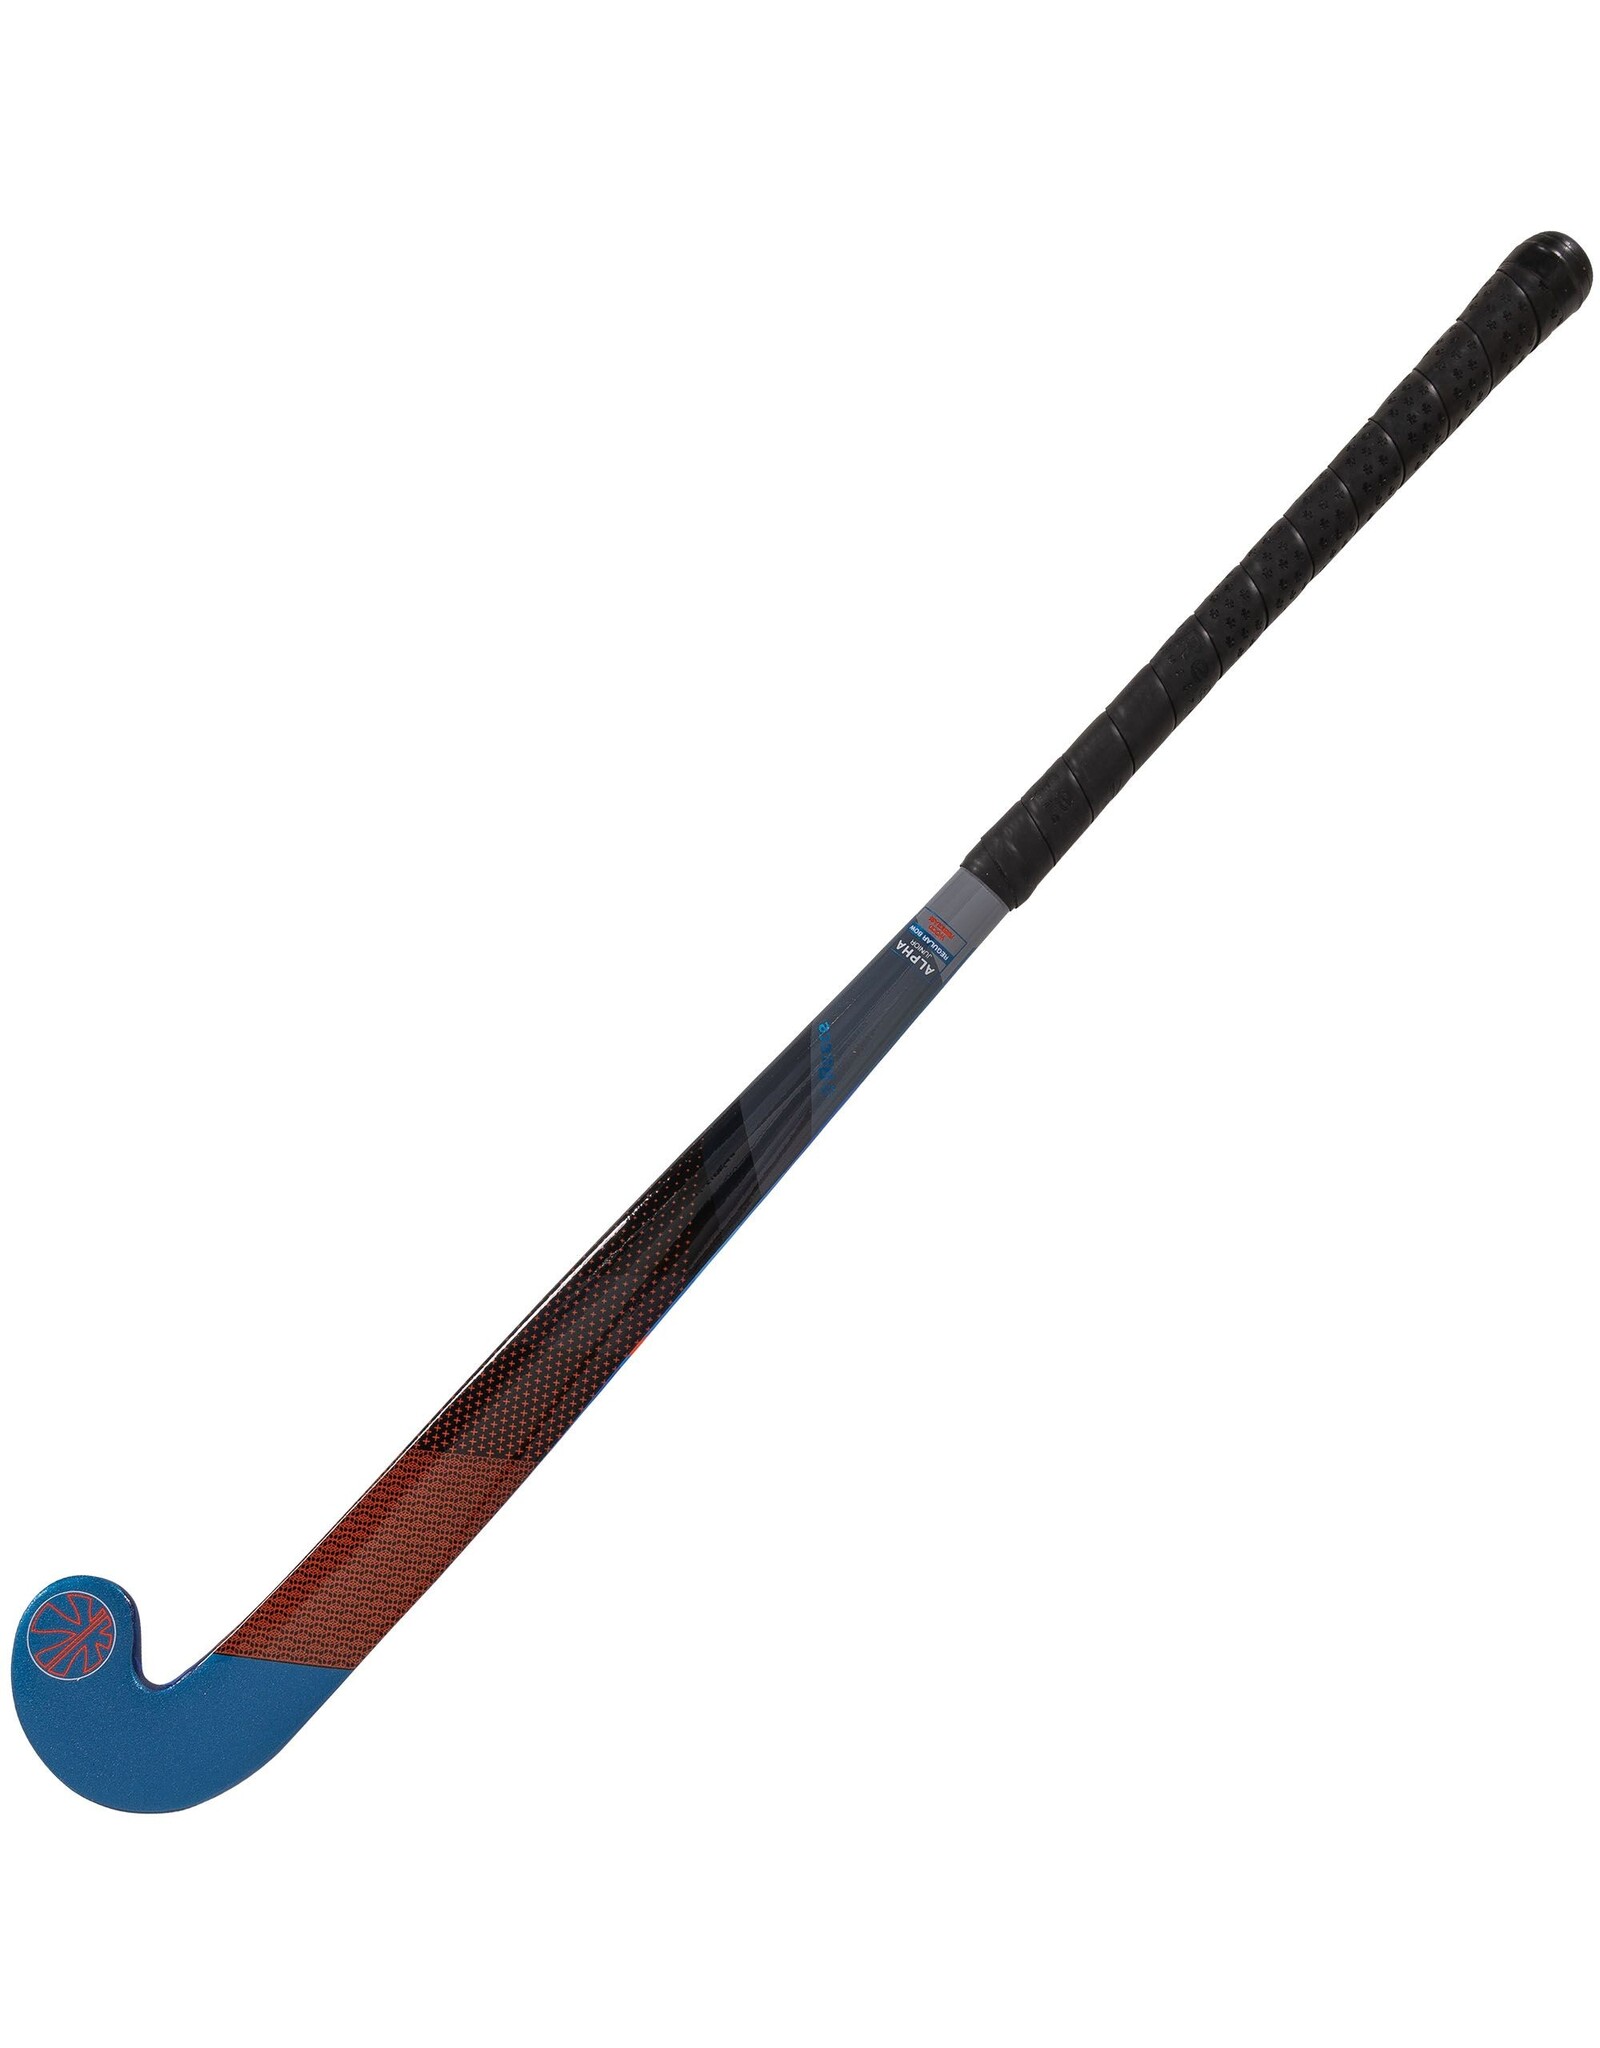 Reece Australia Alpha JR Hockey Stick-Blue-Neon Orange